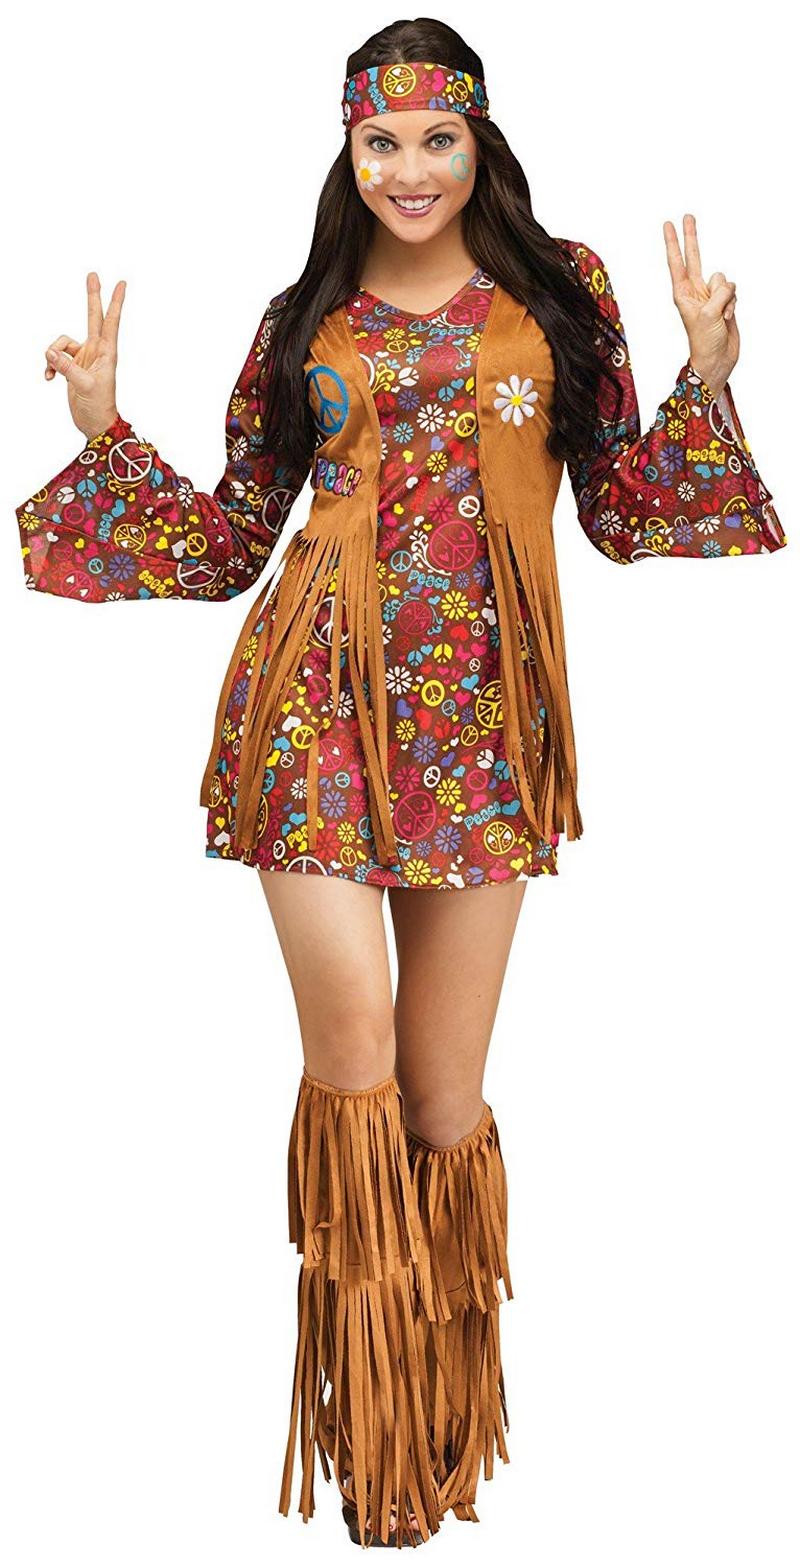  Vêtements Style Boho Hippie (9)